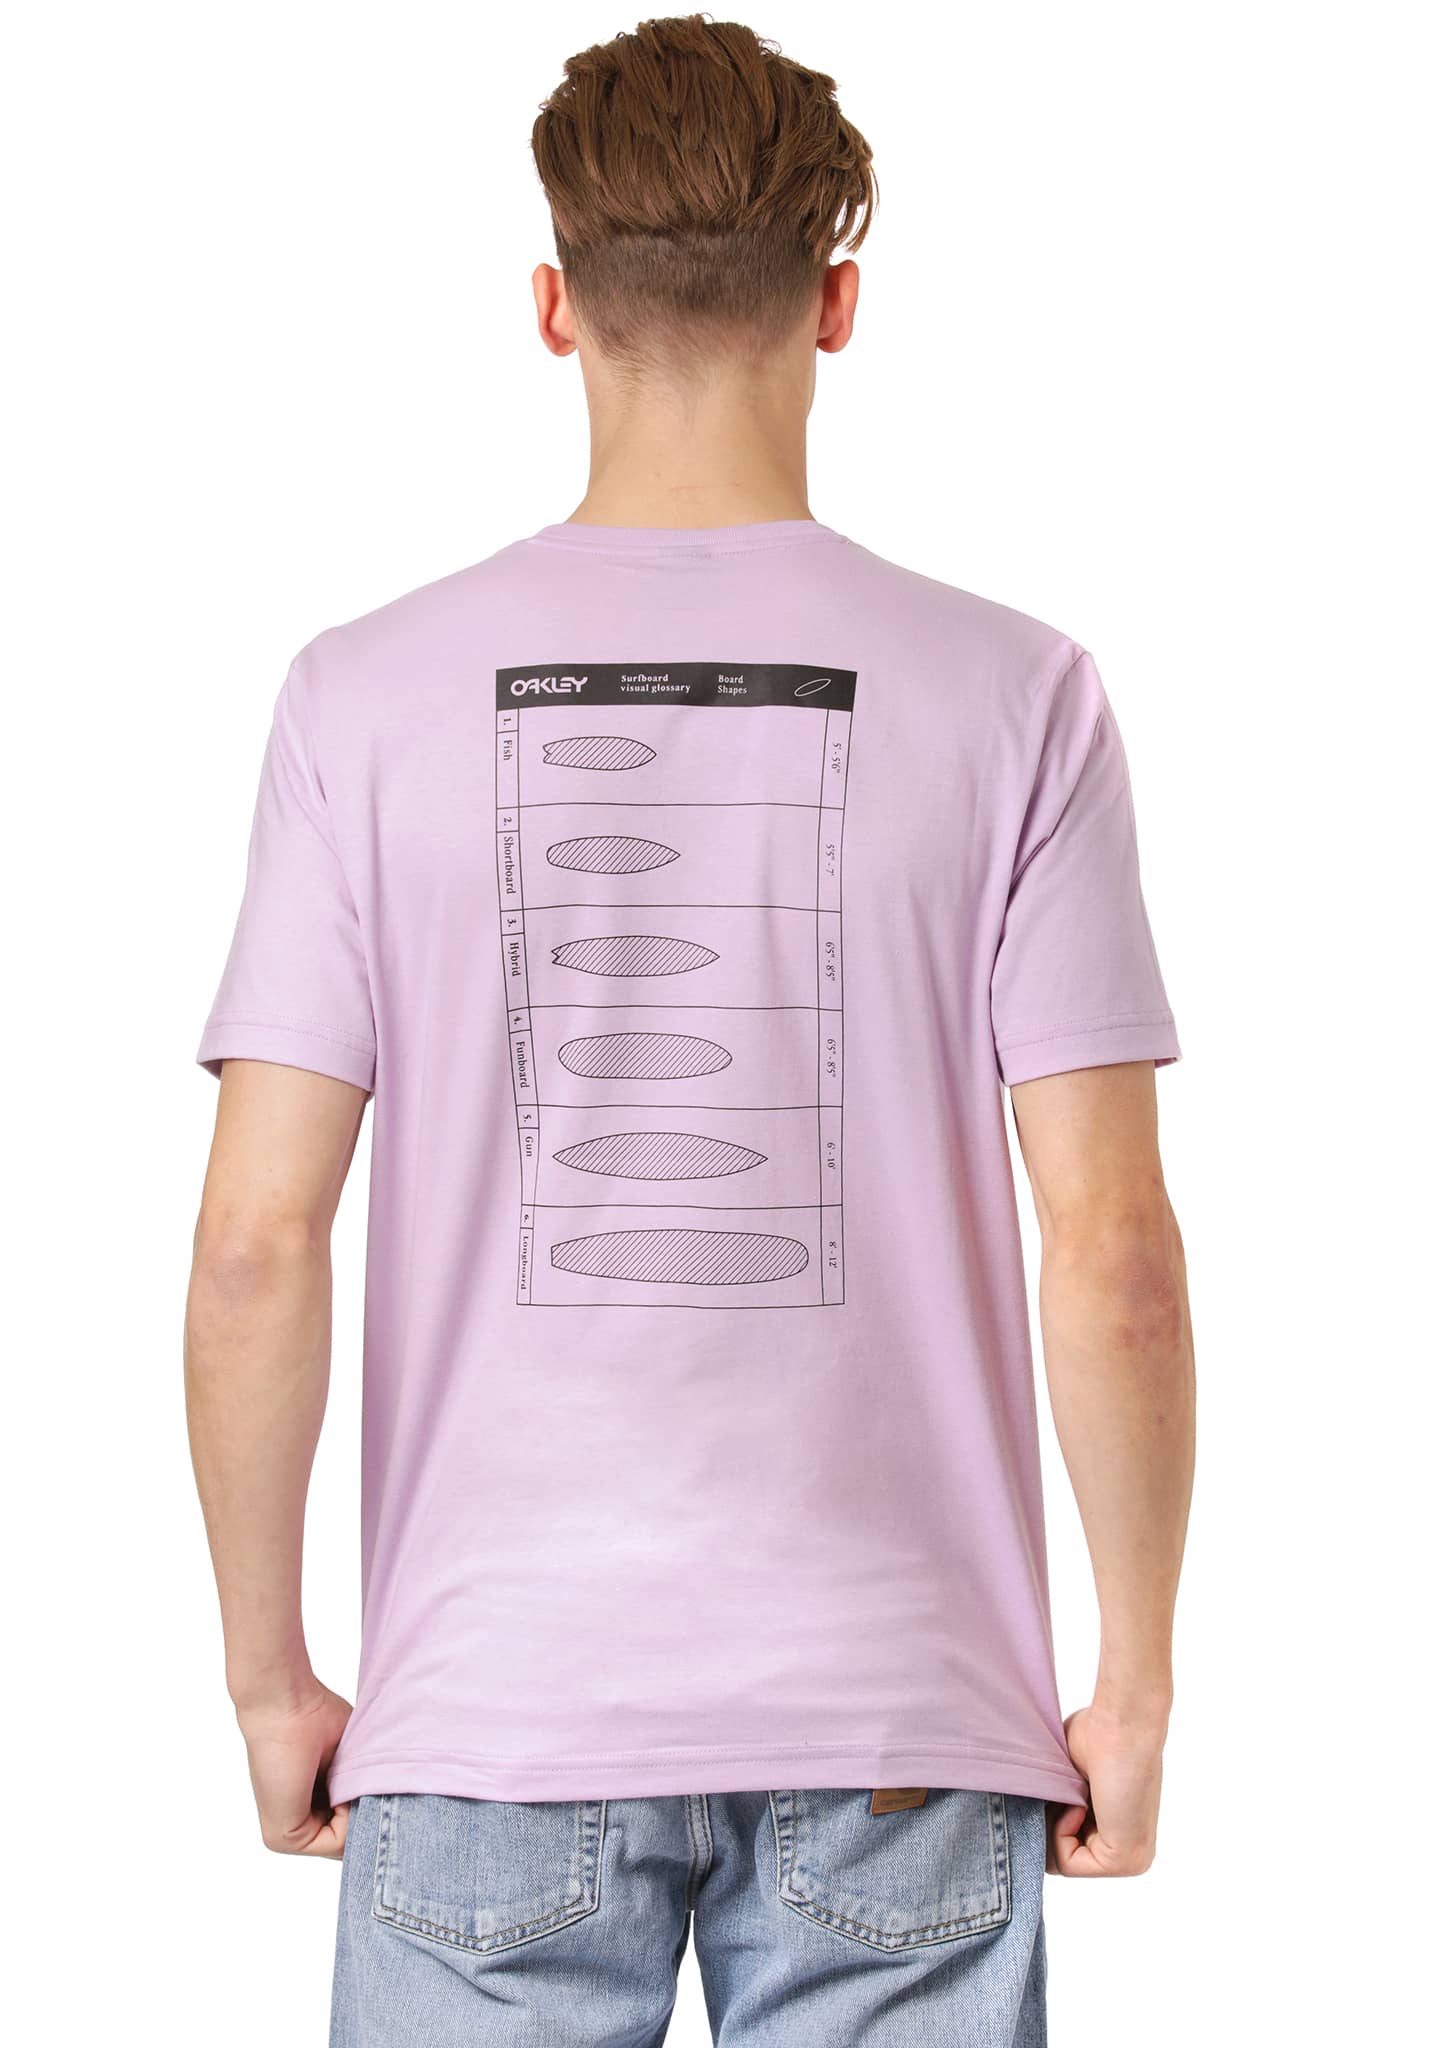 Oakley Surfboard Types T-Shirt staubiger lavendel S